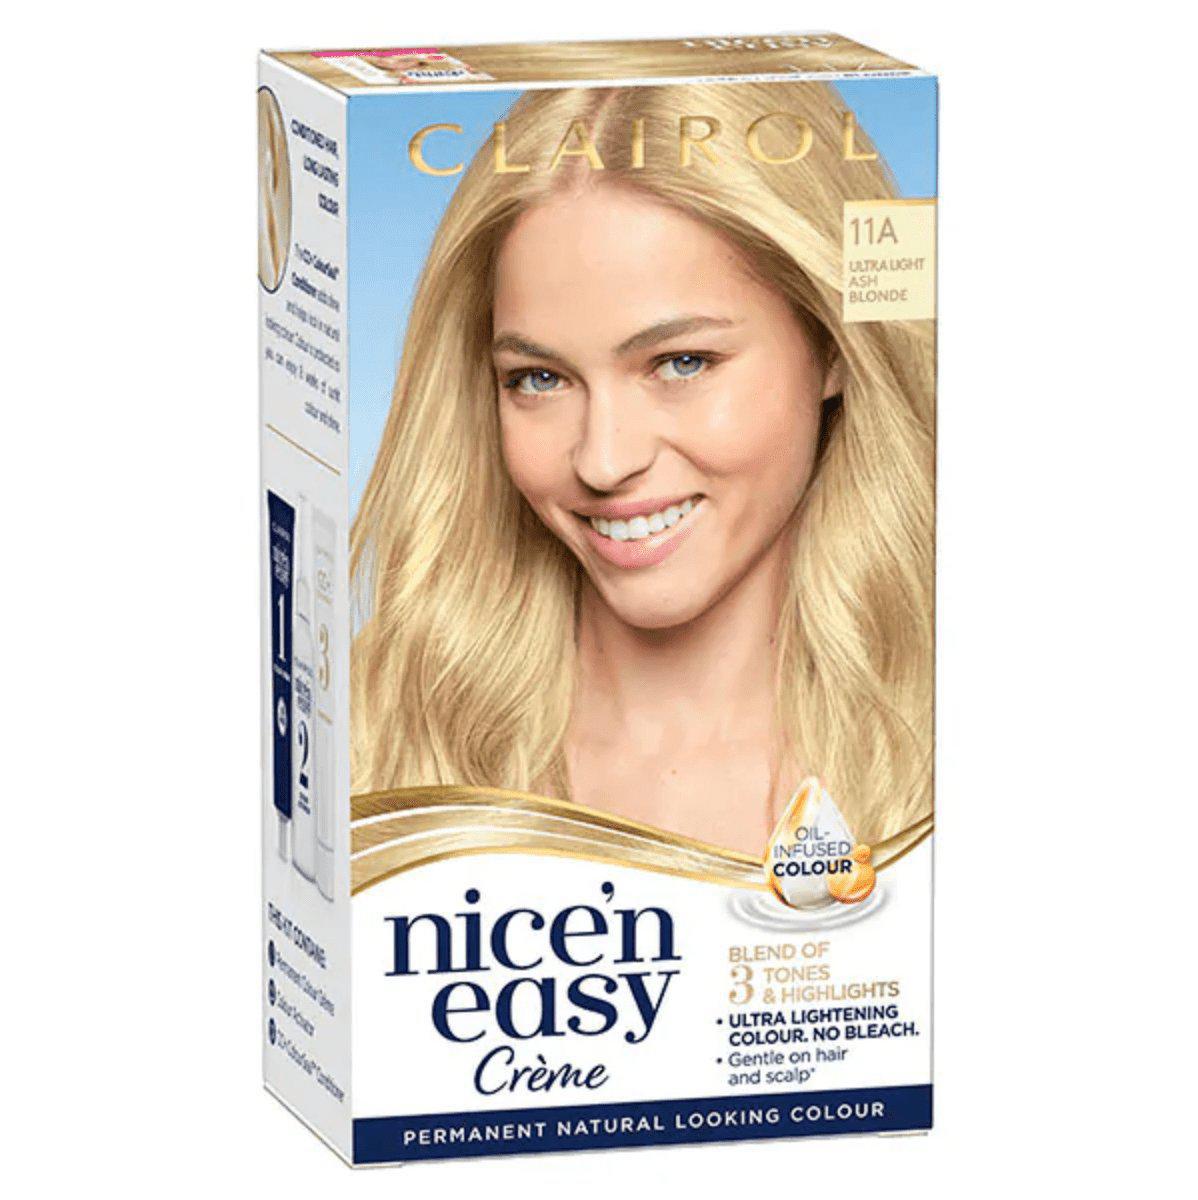 Clairol Nice N Easy Crème Permanent Hair Dye - 11A Ultra Light Ash Blonde - Healthxpress.ie